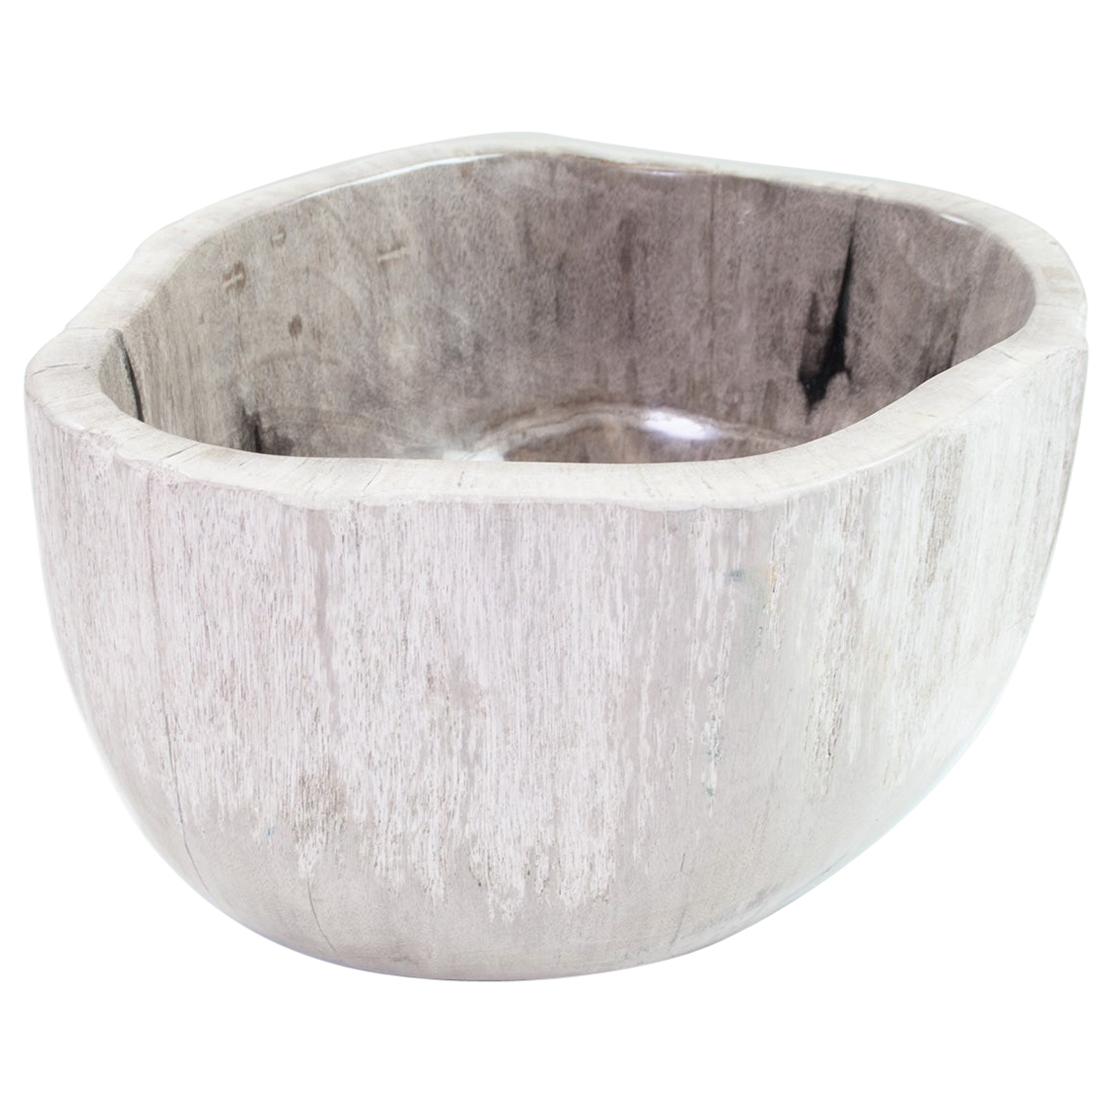 Deep Petrified Wood Bowl in Beige and Hard Coal, Home Accessory Organic Original